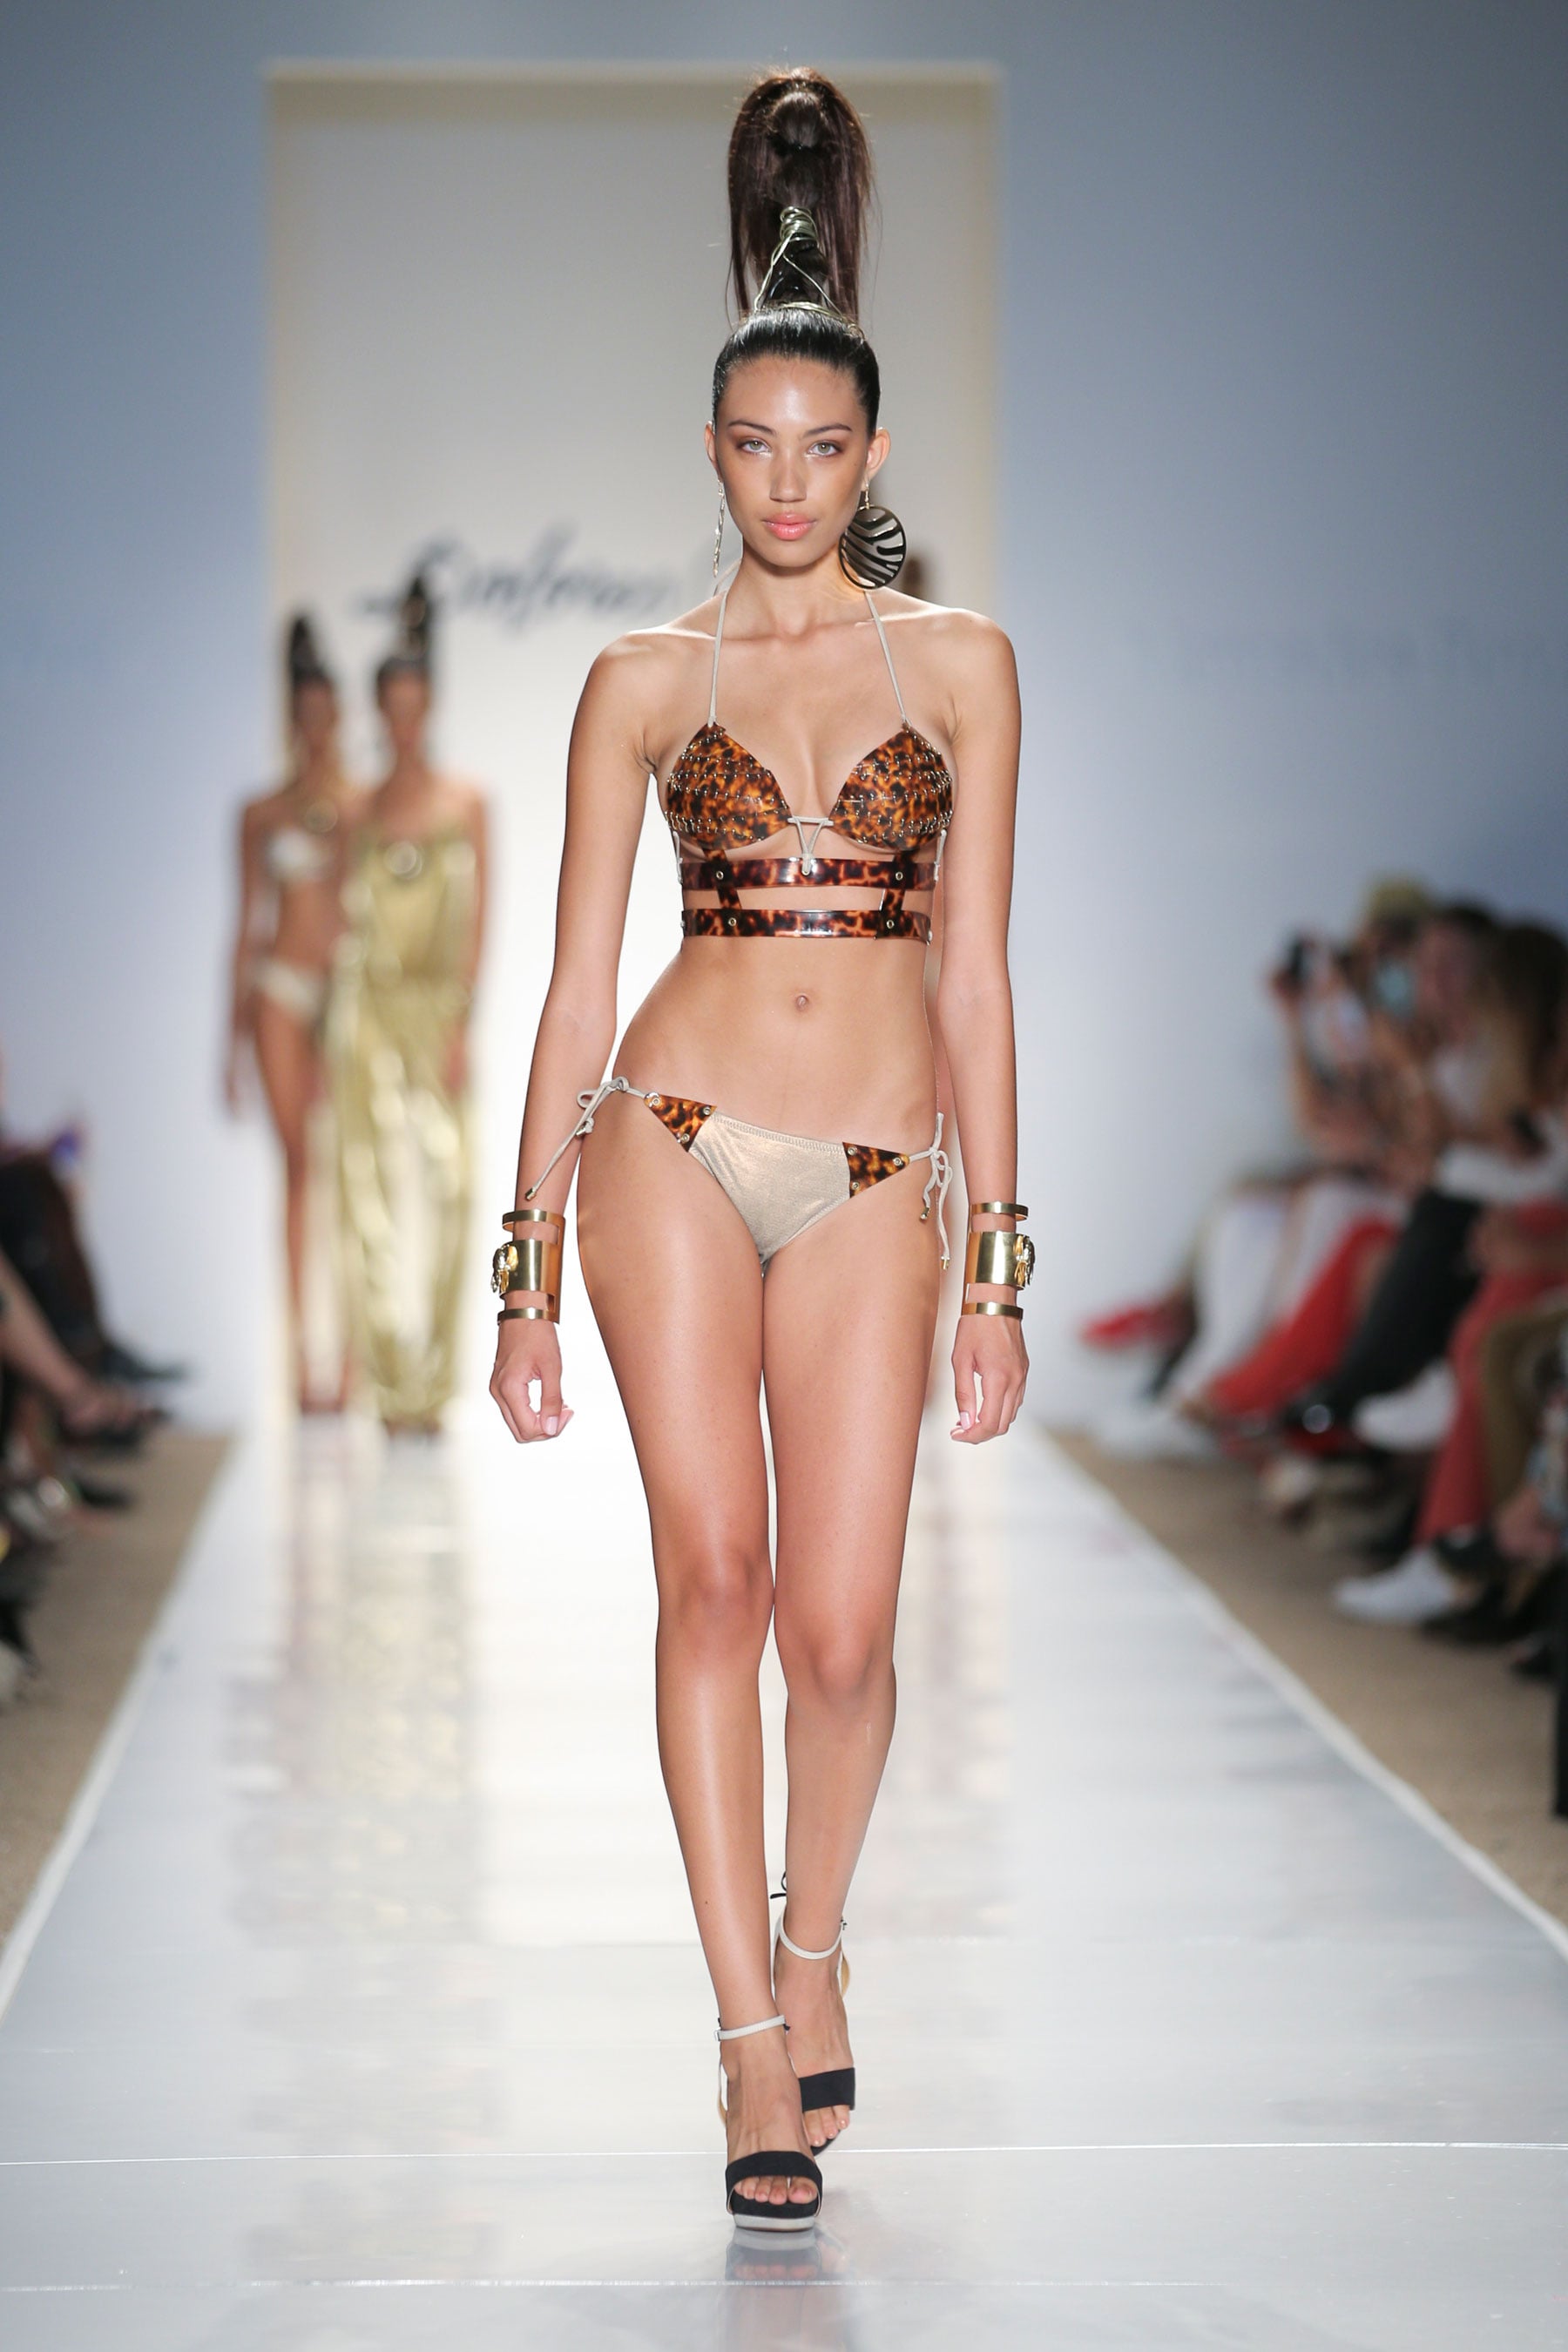 Dolores Cortés Swim | The Sexiest, Bikini Moments From Miami Swim | POPSUGAR Photo 45